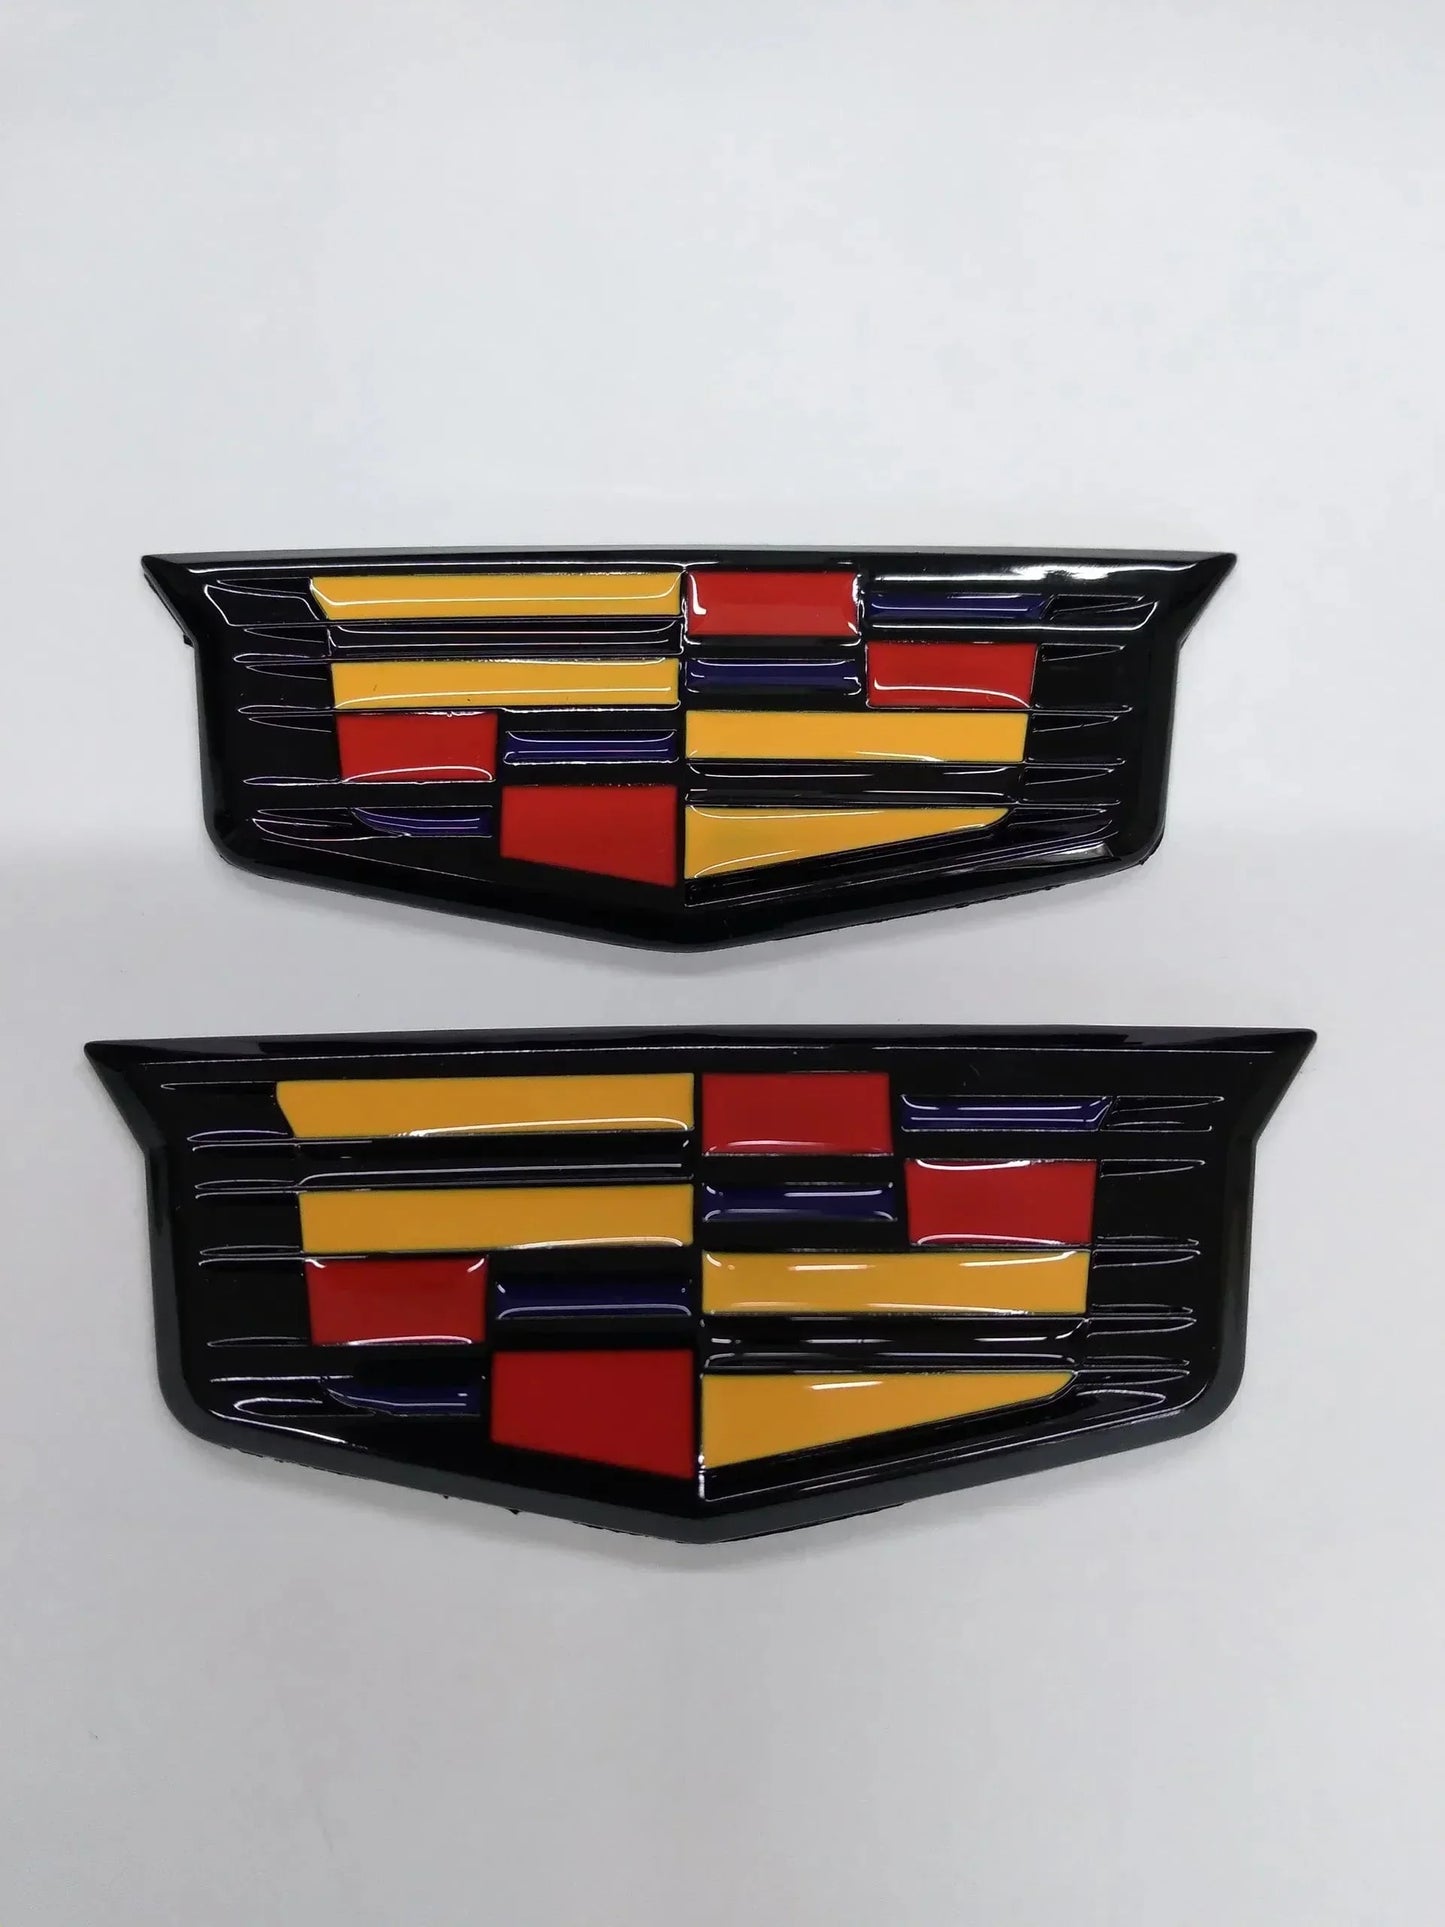 CT5-V Cadillac "Shield" Small Black Fender Emblems w/ Colored Center